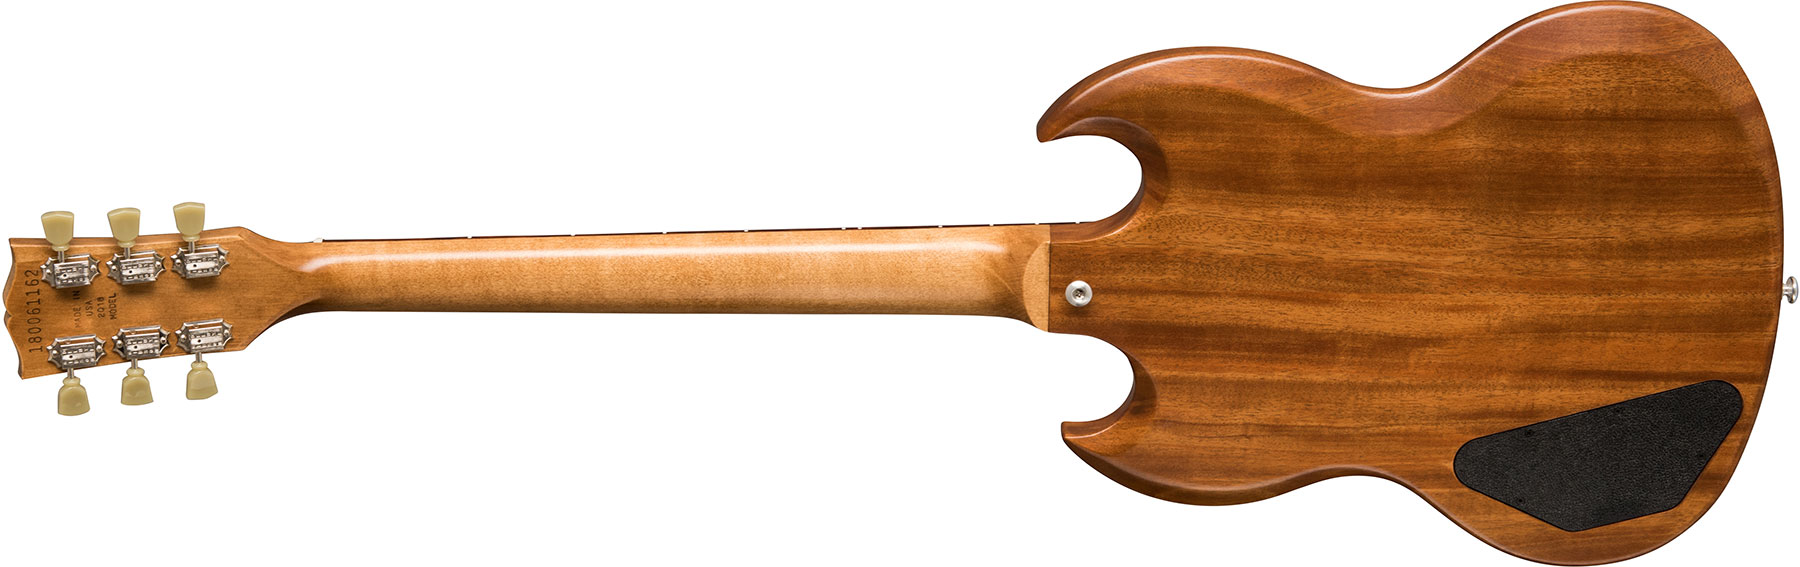 Gibson Sg Standard Tribute - Natural Walnut - Double Cut E-Gitarre - Variation 1